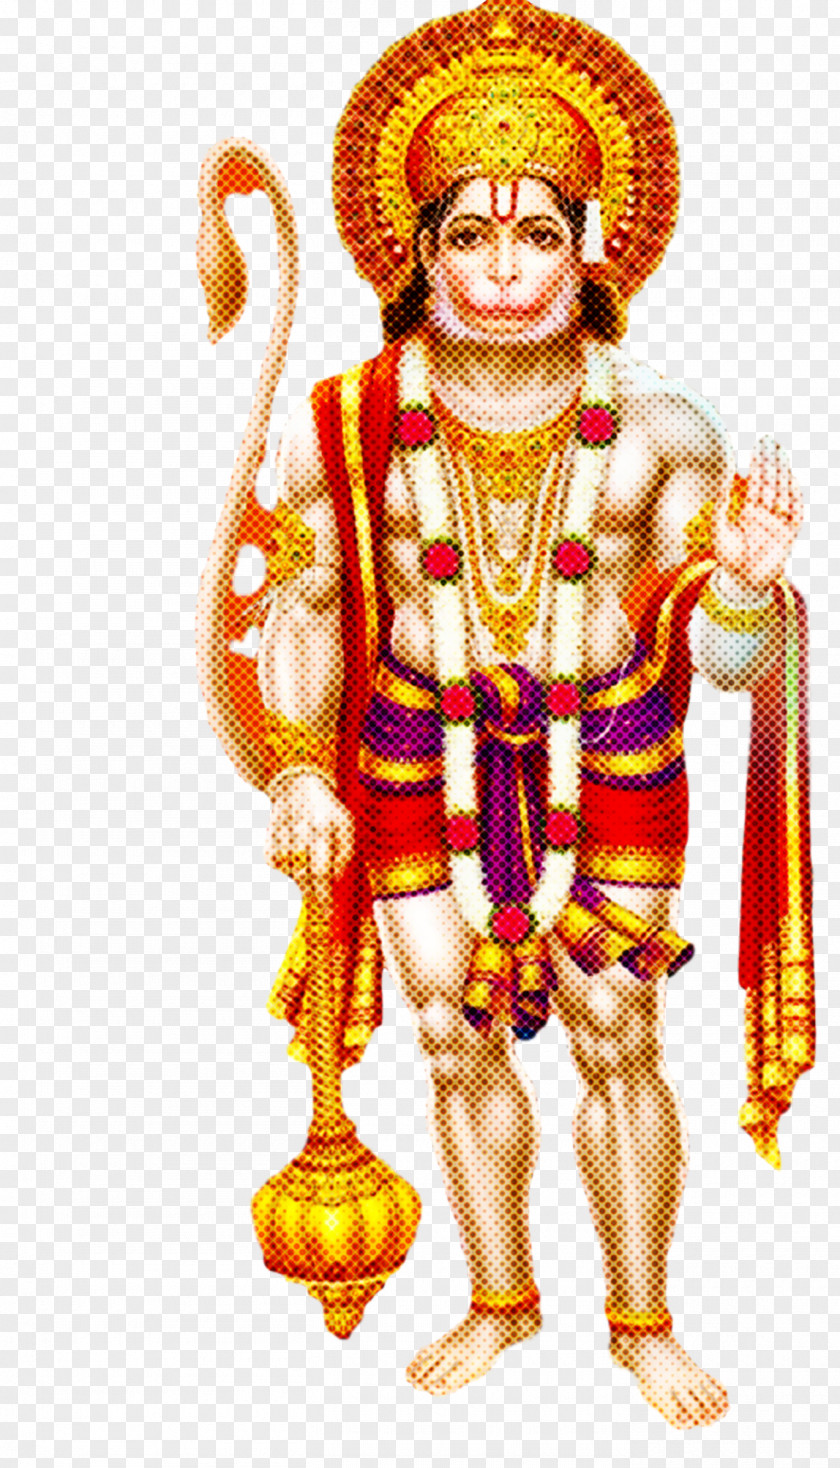 Hanuman Jayanti PNG